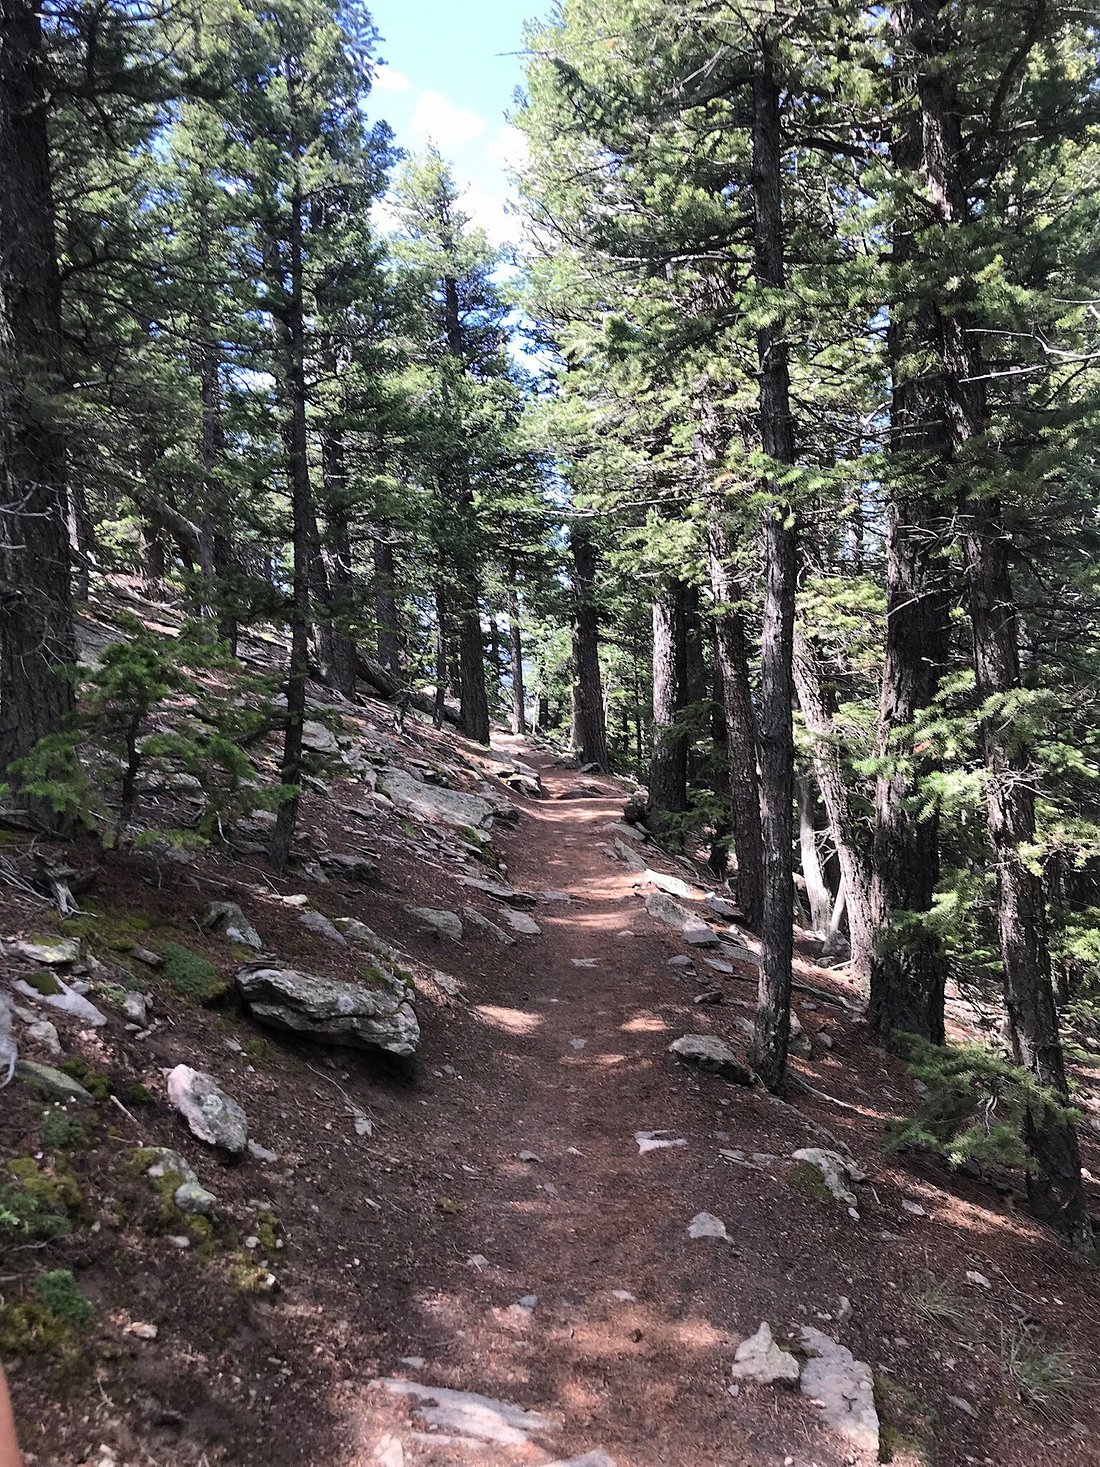 Deer Mountain Trail